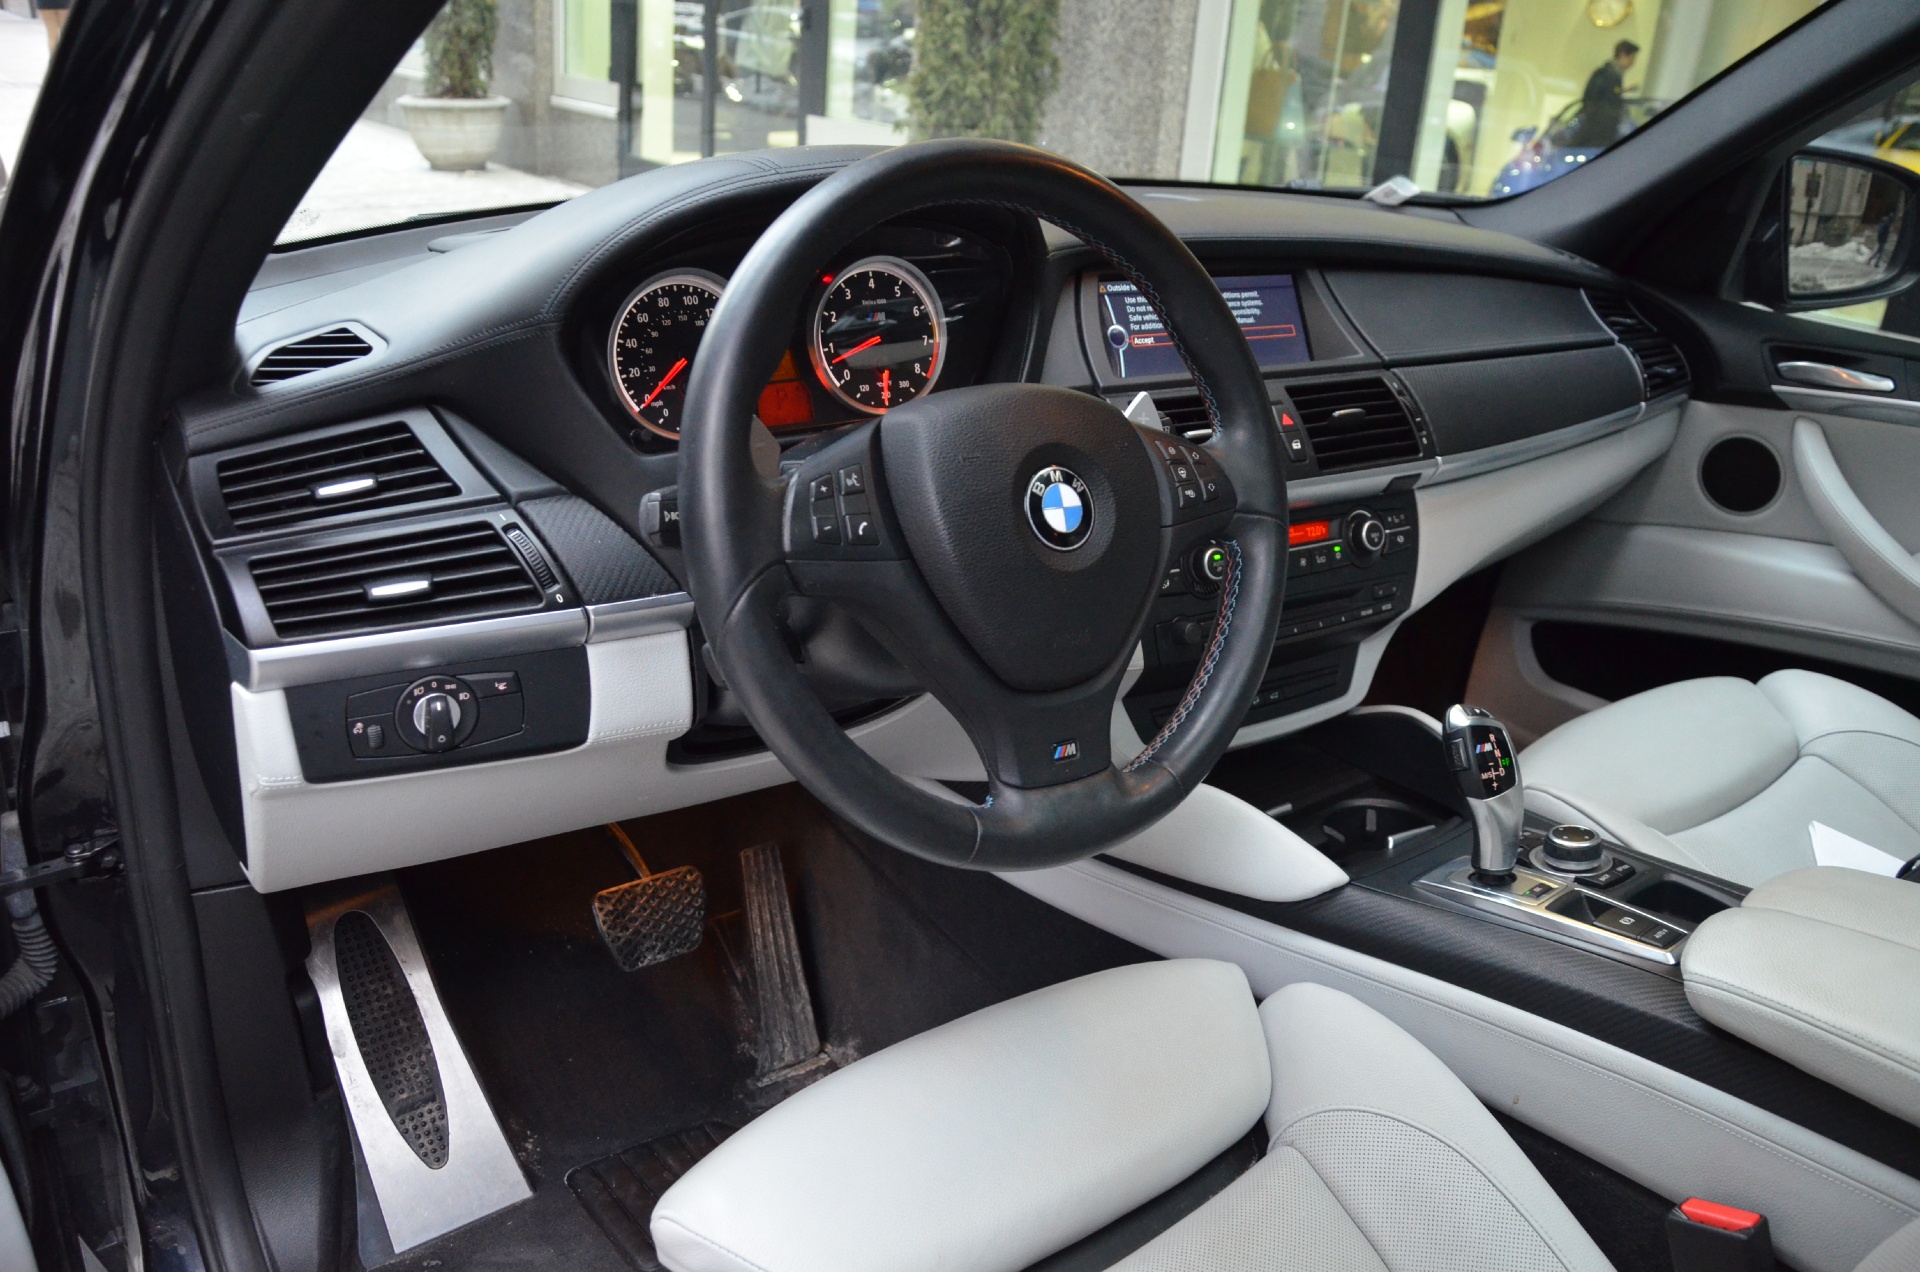 2010 BMW X5 M Stock # GC-MIR16 for sale near Chicago, IL | IL BMW Dealer